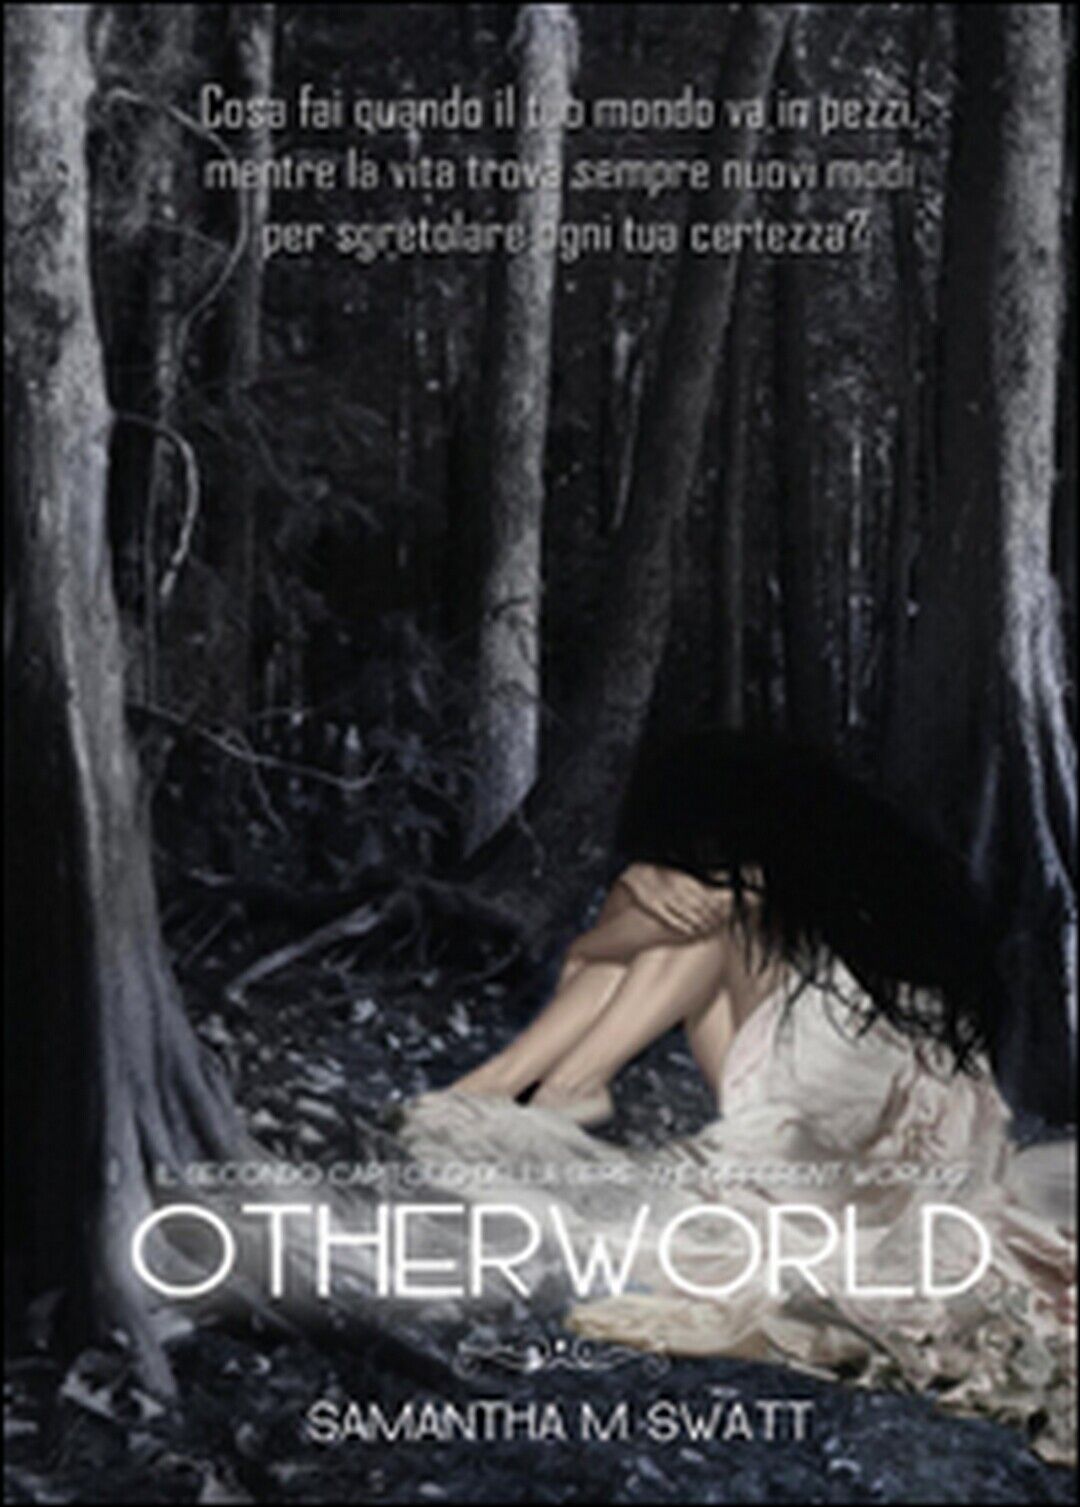 Otherworld (Different Worlds) Vol.2  di Samantha M. Swatt,  2015,  Youcanprint